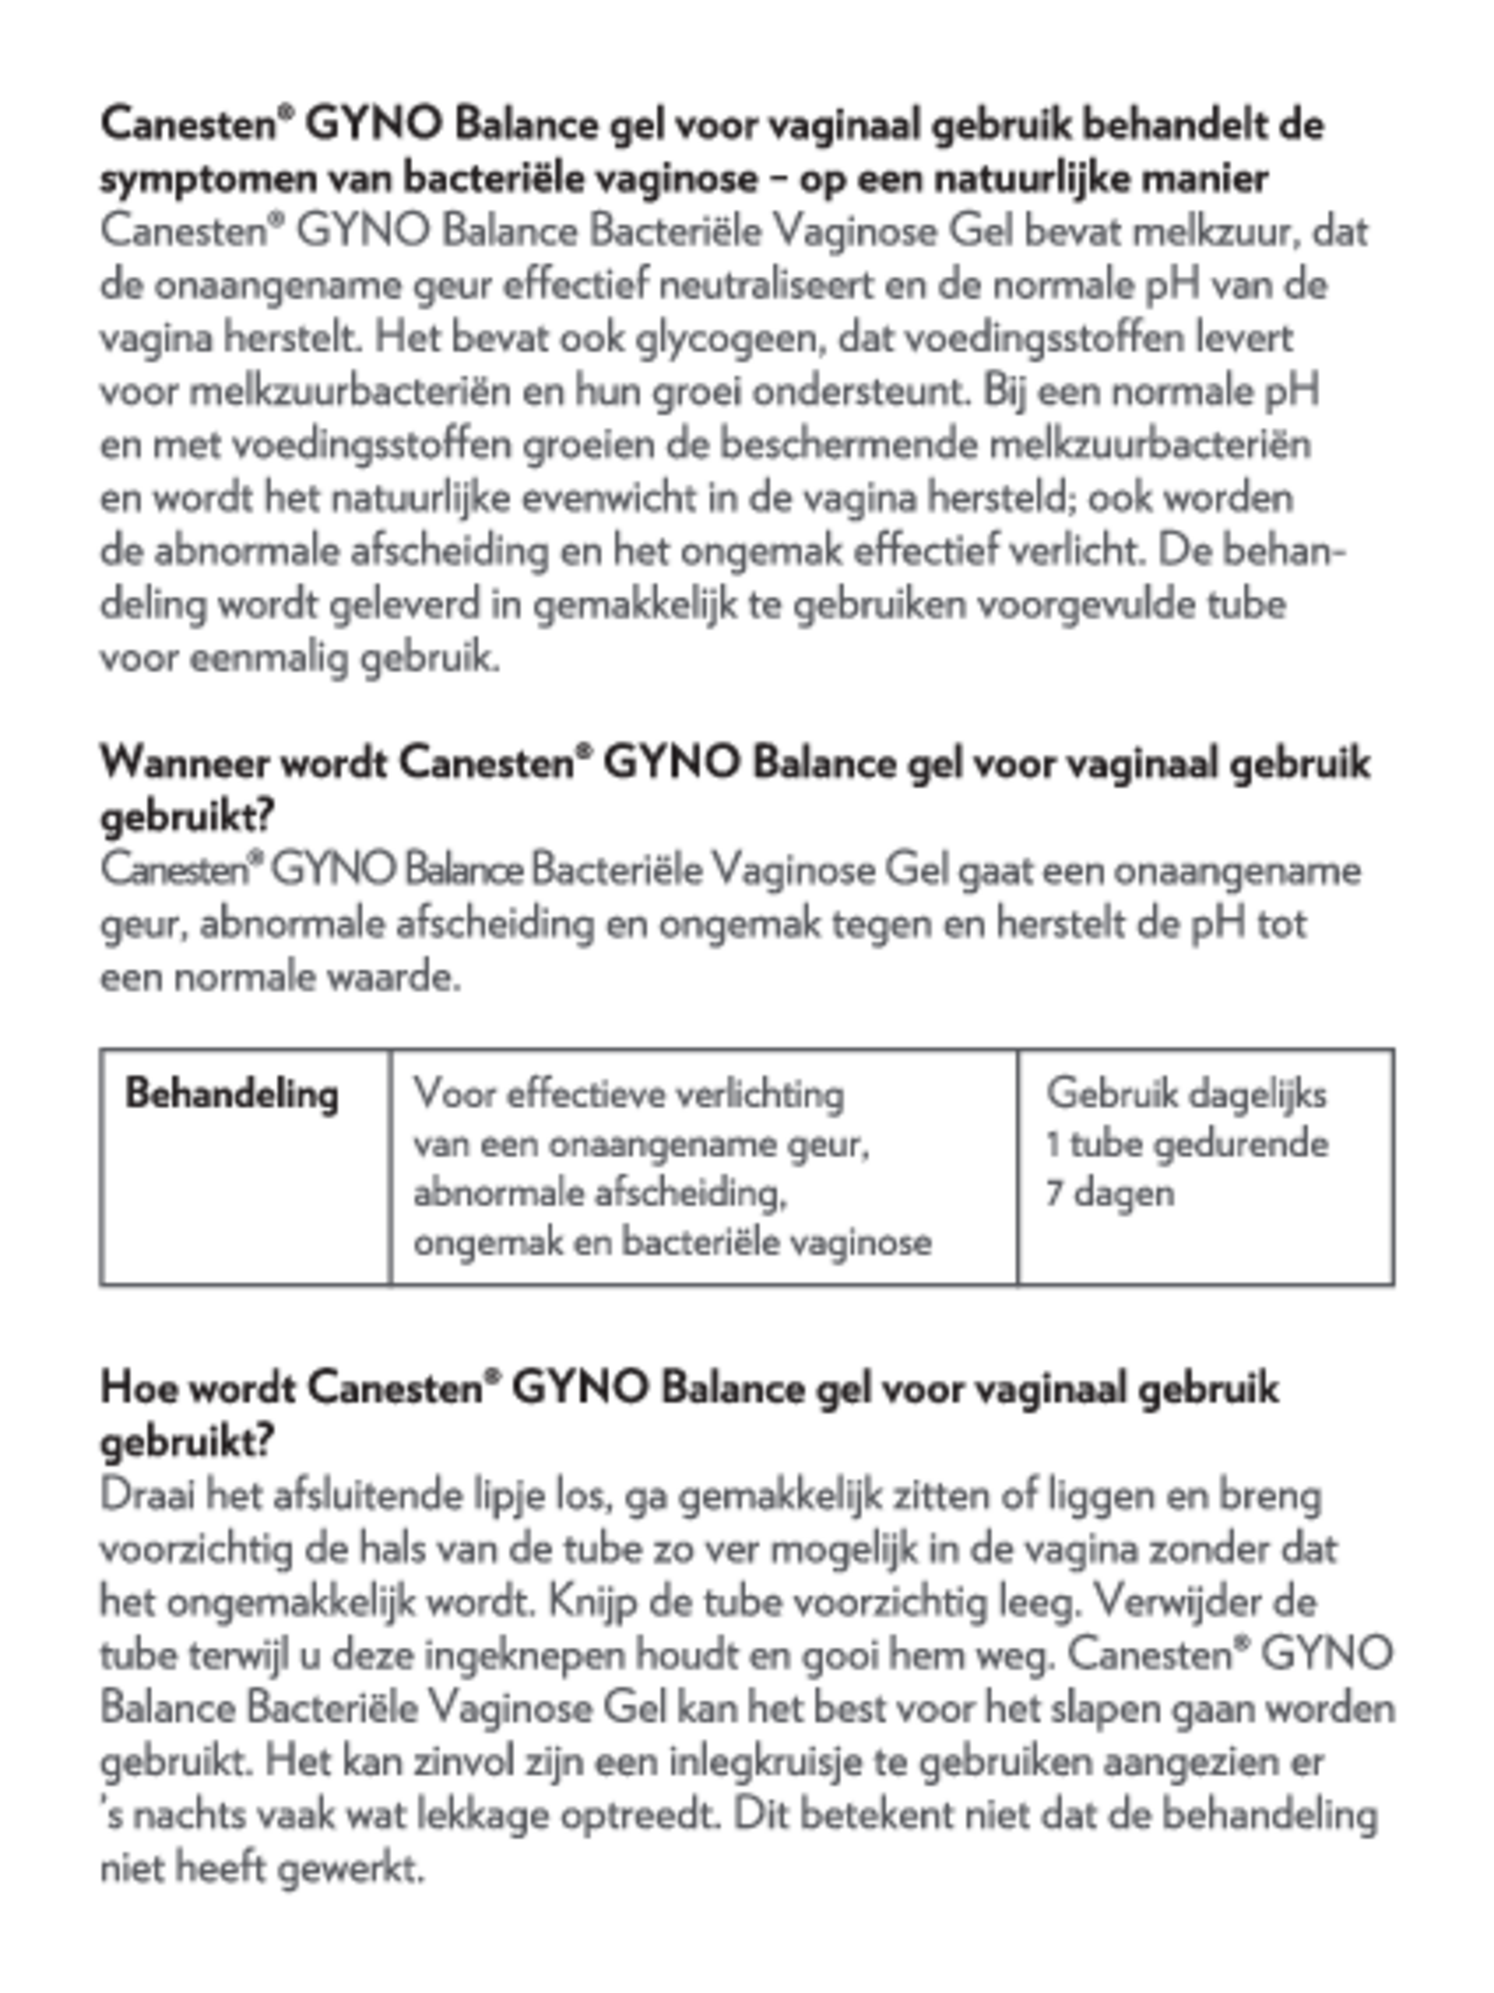 Gyno Balance Gel afbeelding van document #2, gebruiksaanwijzing